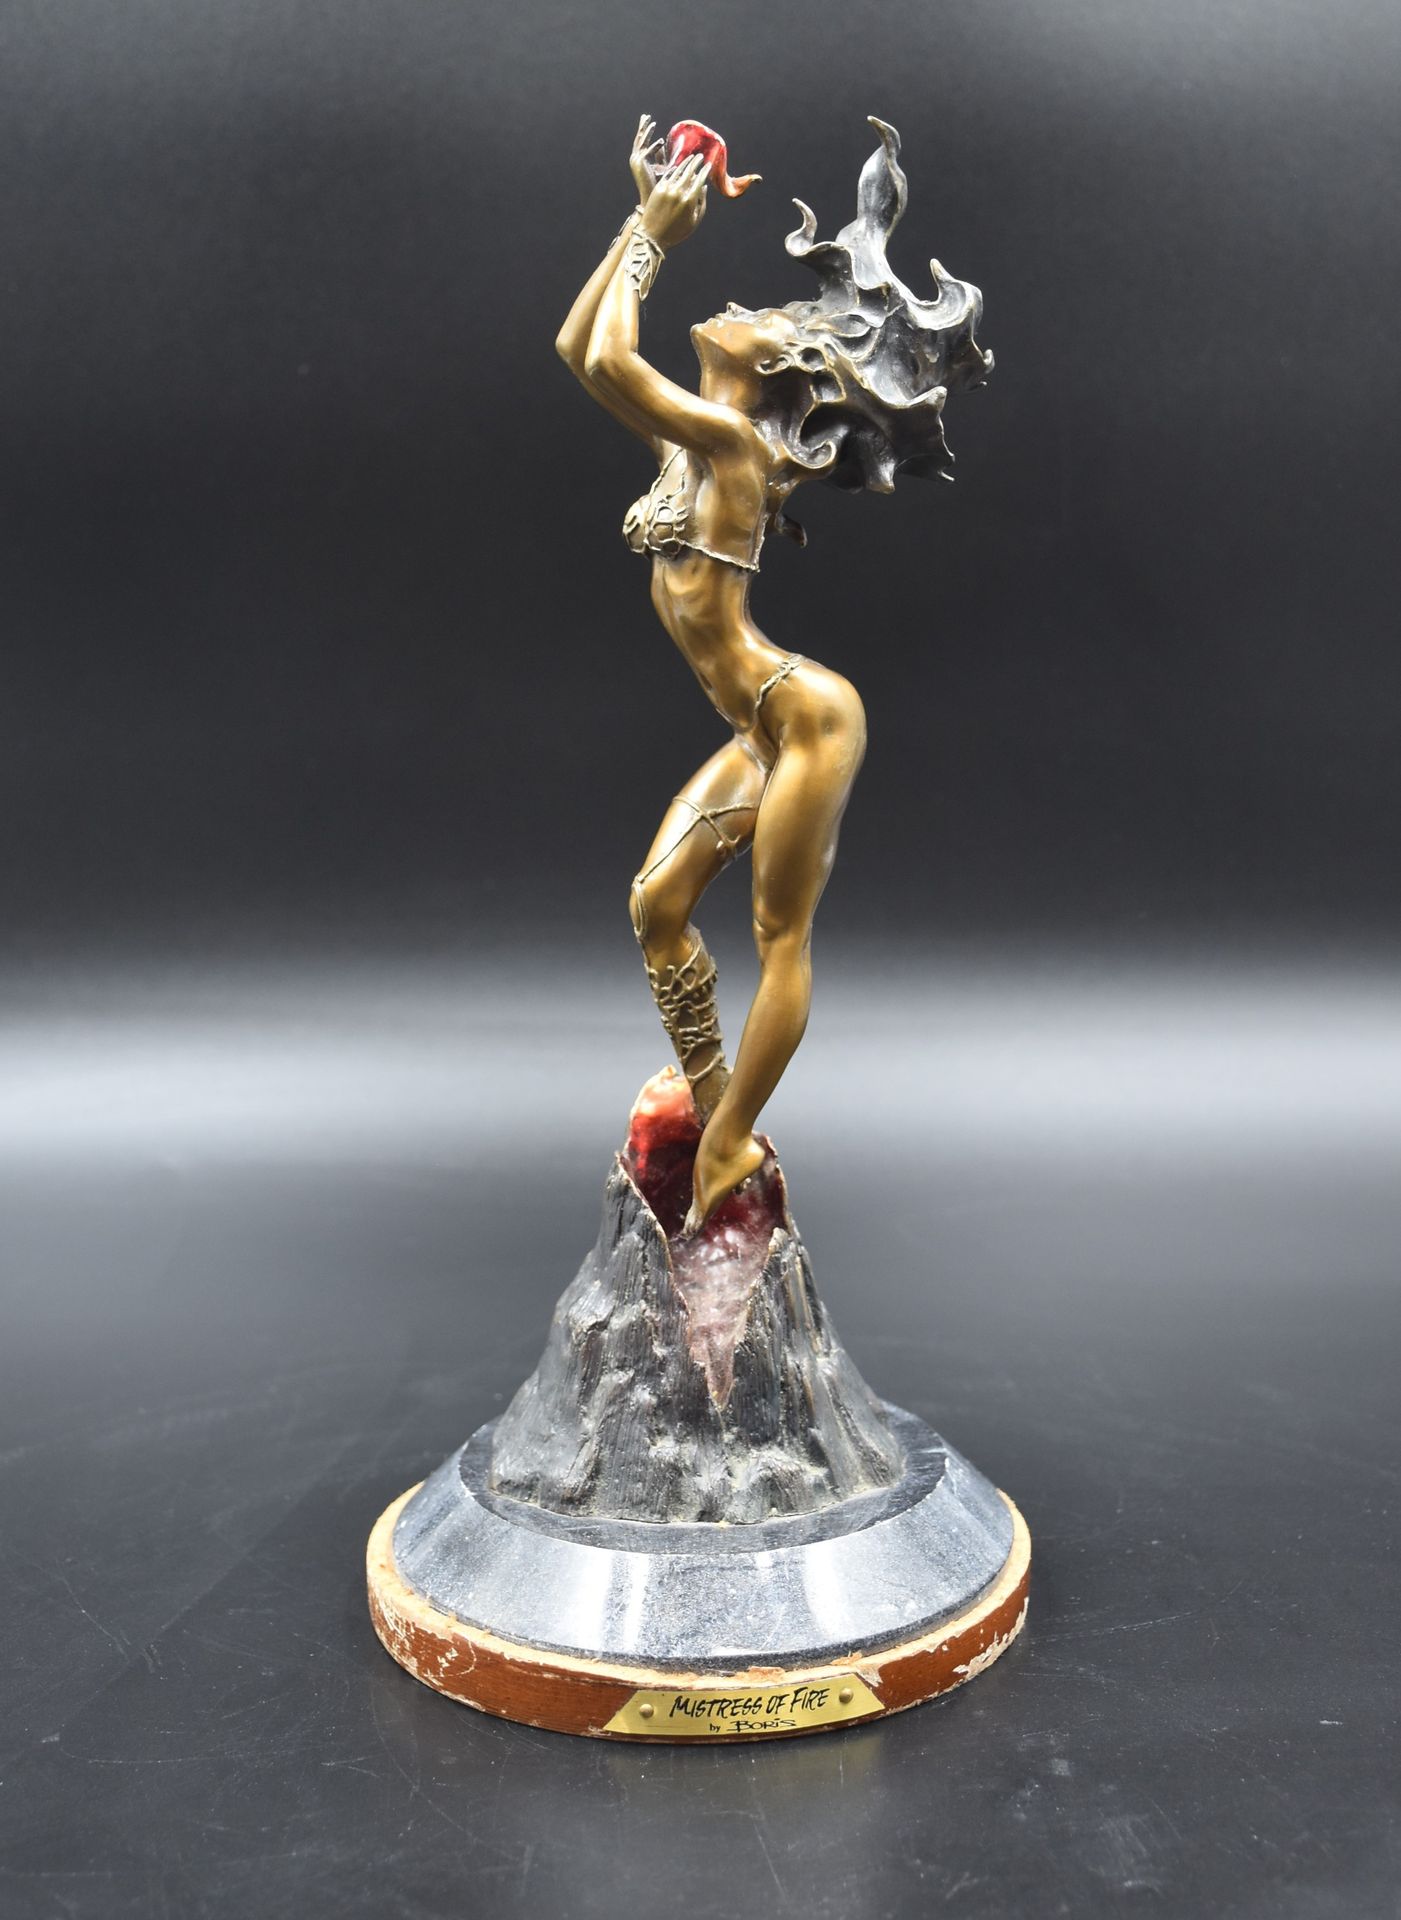 Boris VALLEJO (1941) 鲍里斯-巴列霍（1941）。题为 "鲍里斯的火的女主人 "的奇妙青铜雕塑。木质底座略有损坏。高度：30厘米。 

NL&hellip;